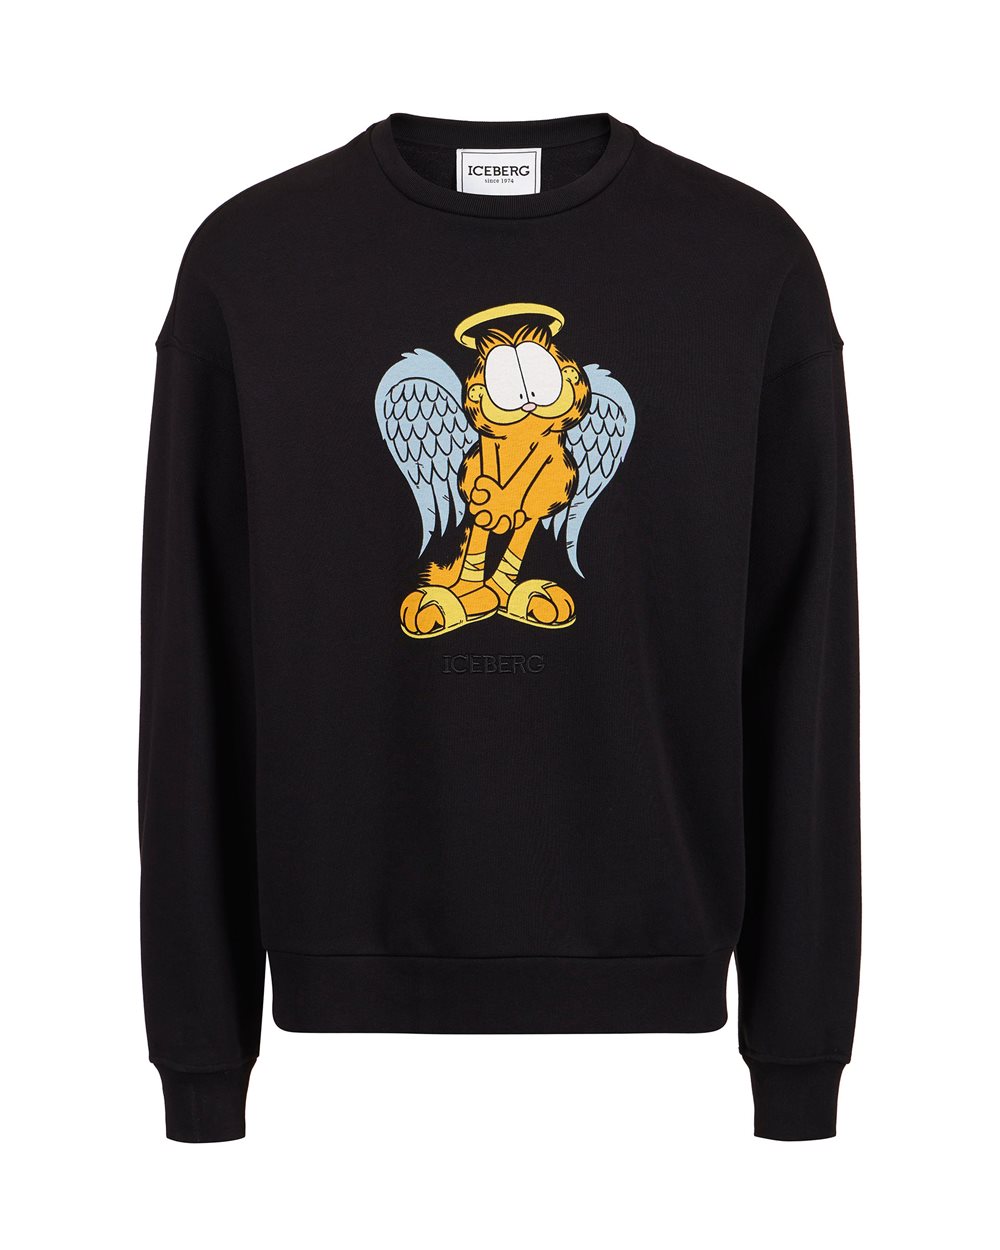 Sweatshirt with Garfield design - PREVIEW | Iceberg - Official Website